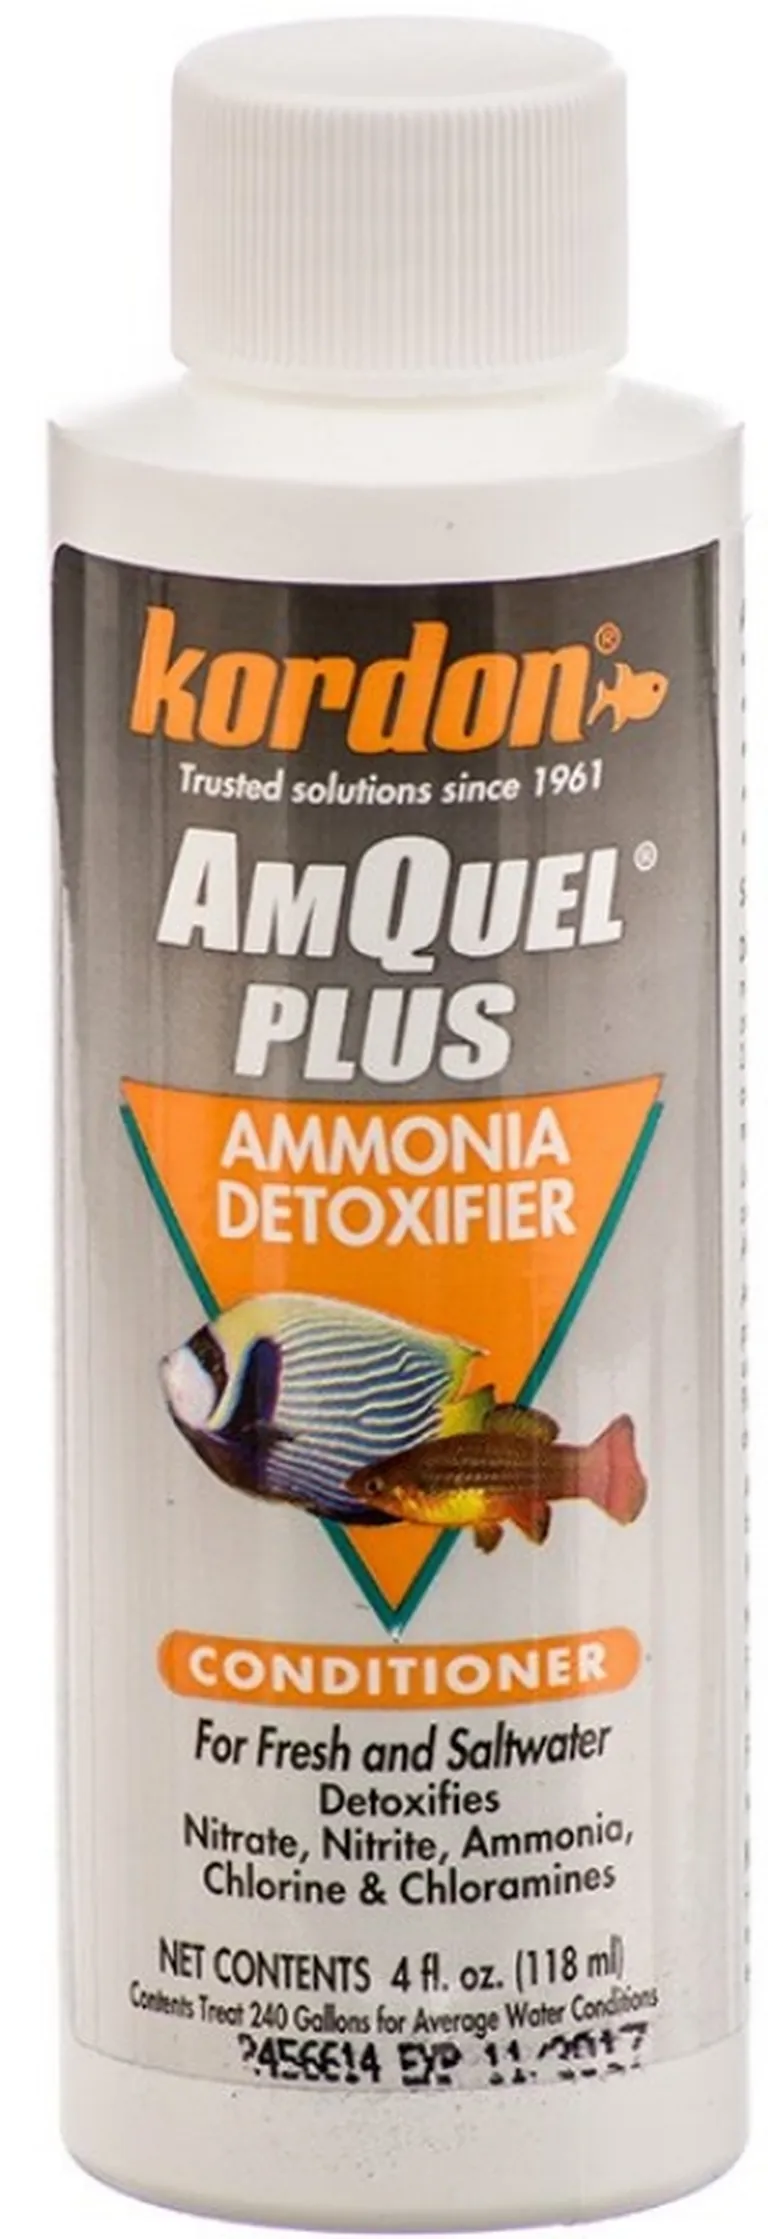 Kordon AmQuel Plus Ammonia Detoxifier Conditioner Photo 1